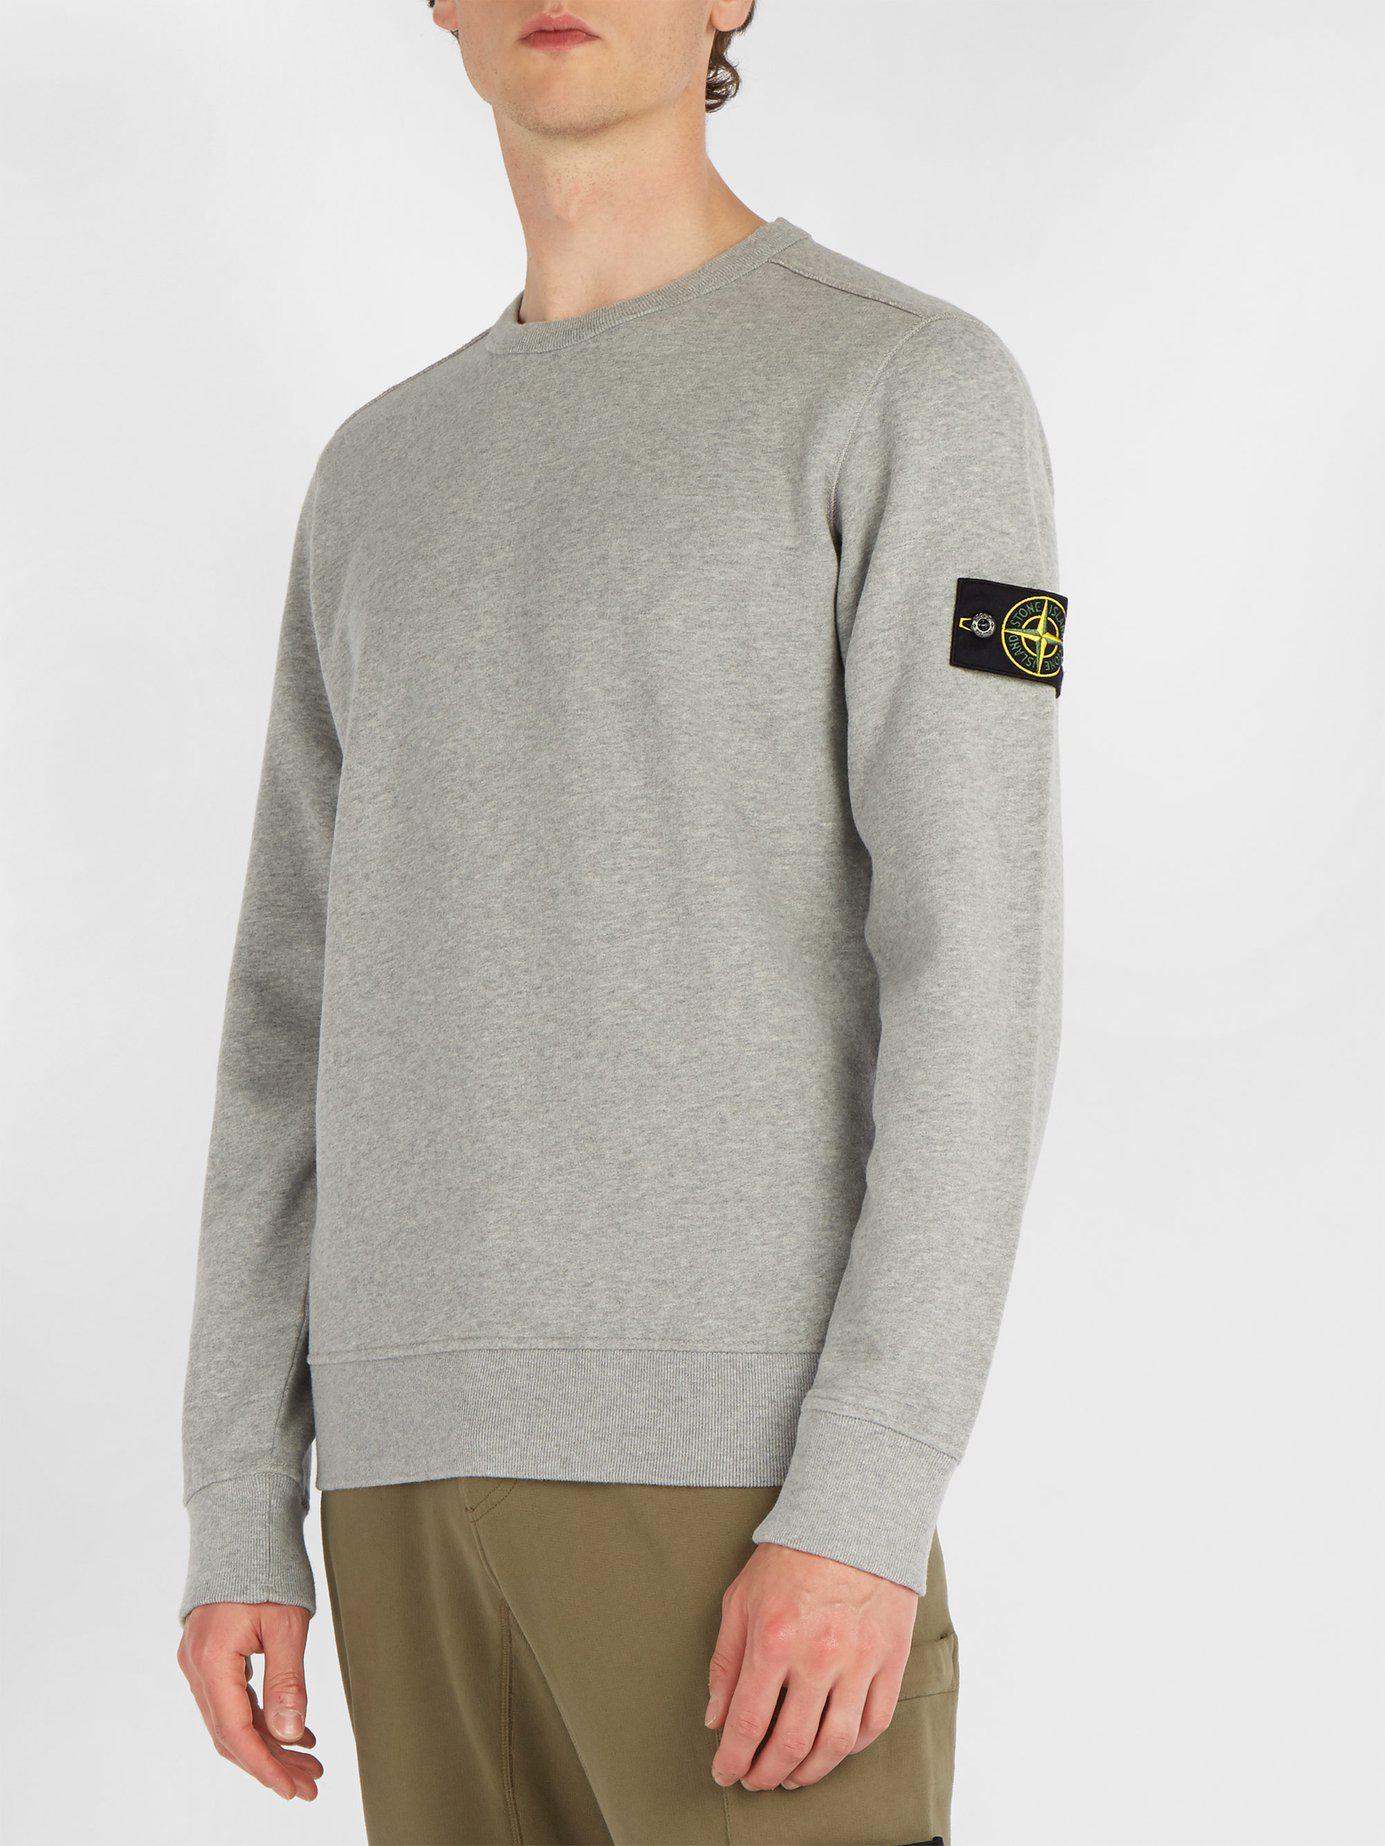 Stone Island Cotton-jersey Sweatshirt in Grey (Gray) for Men - Lyst